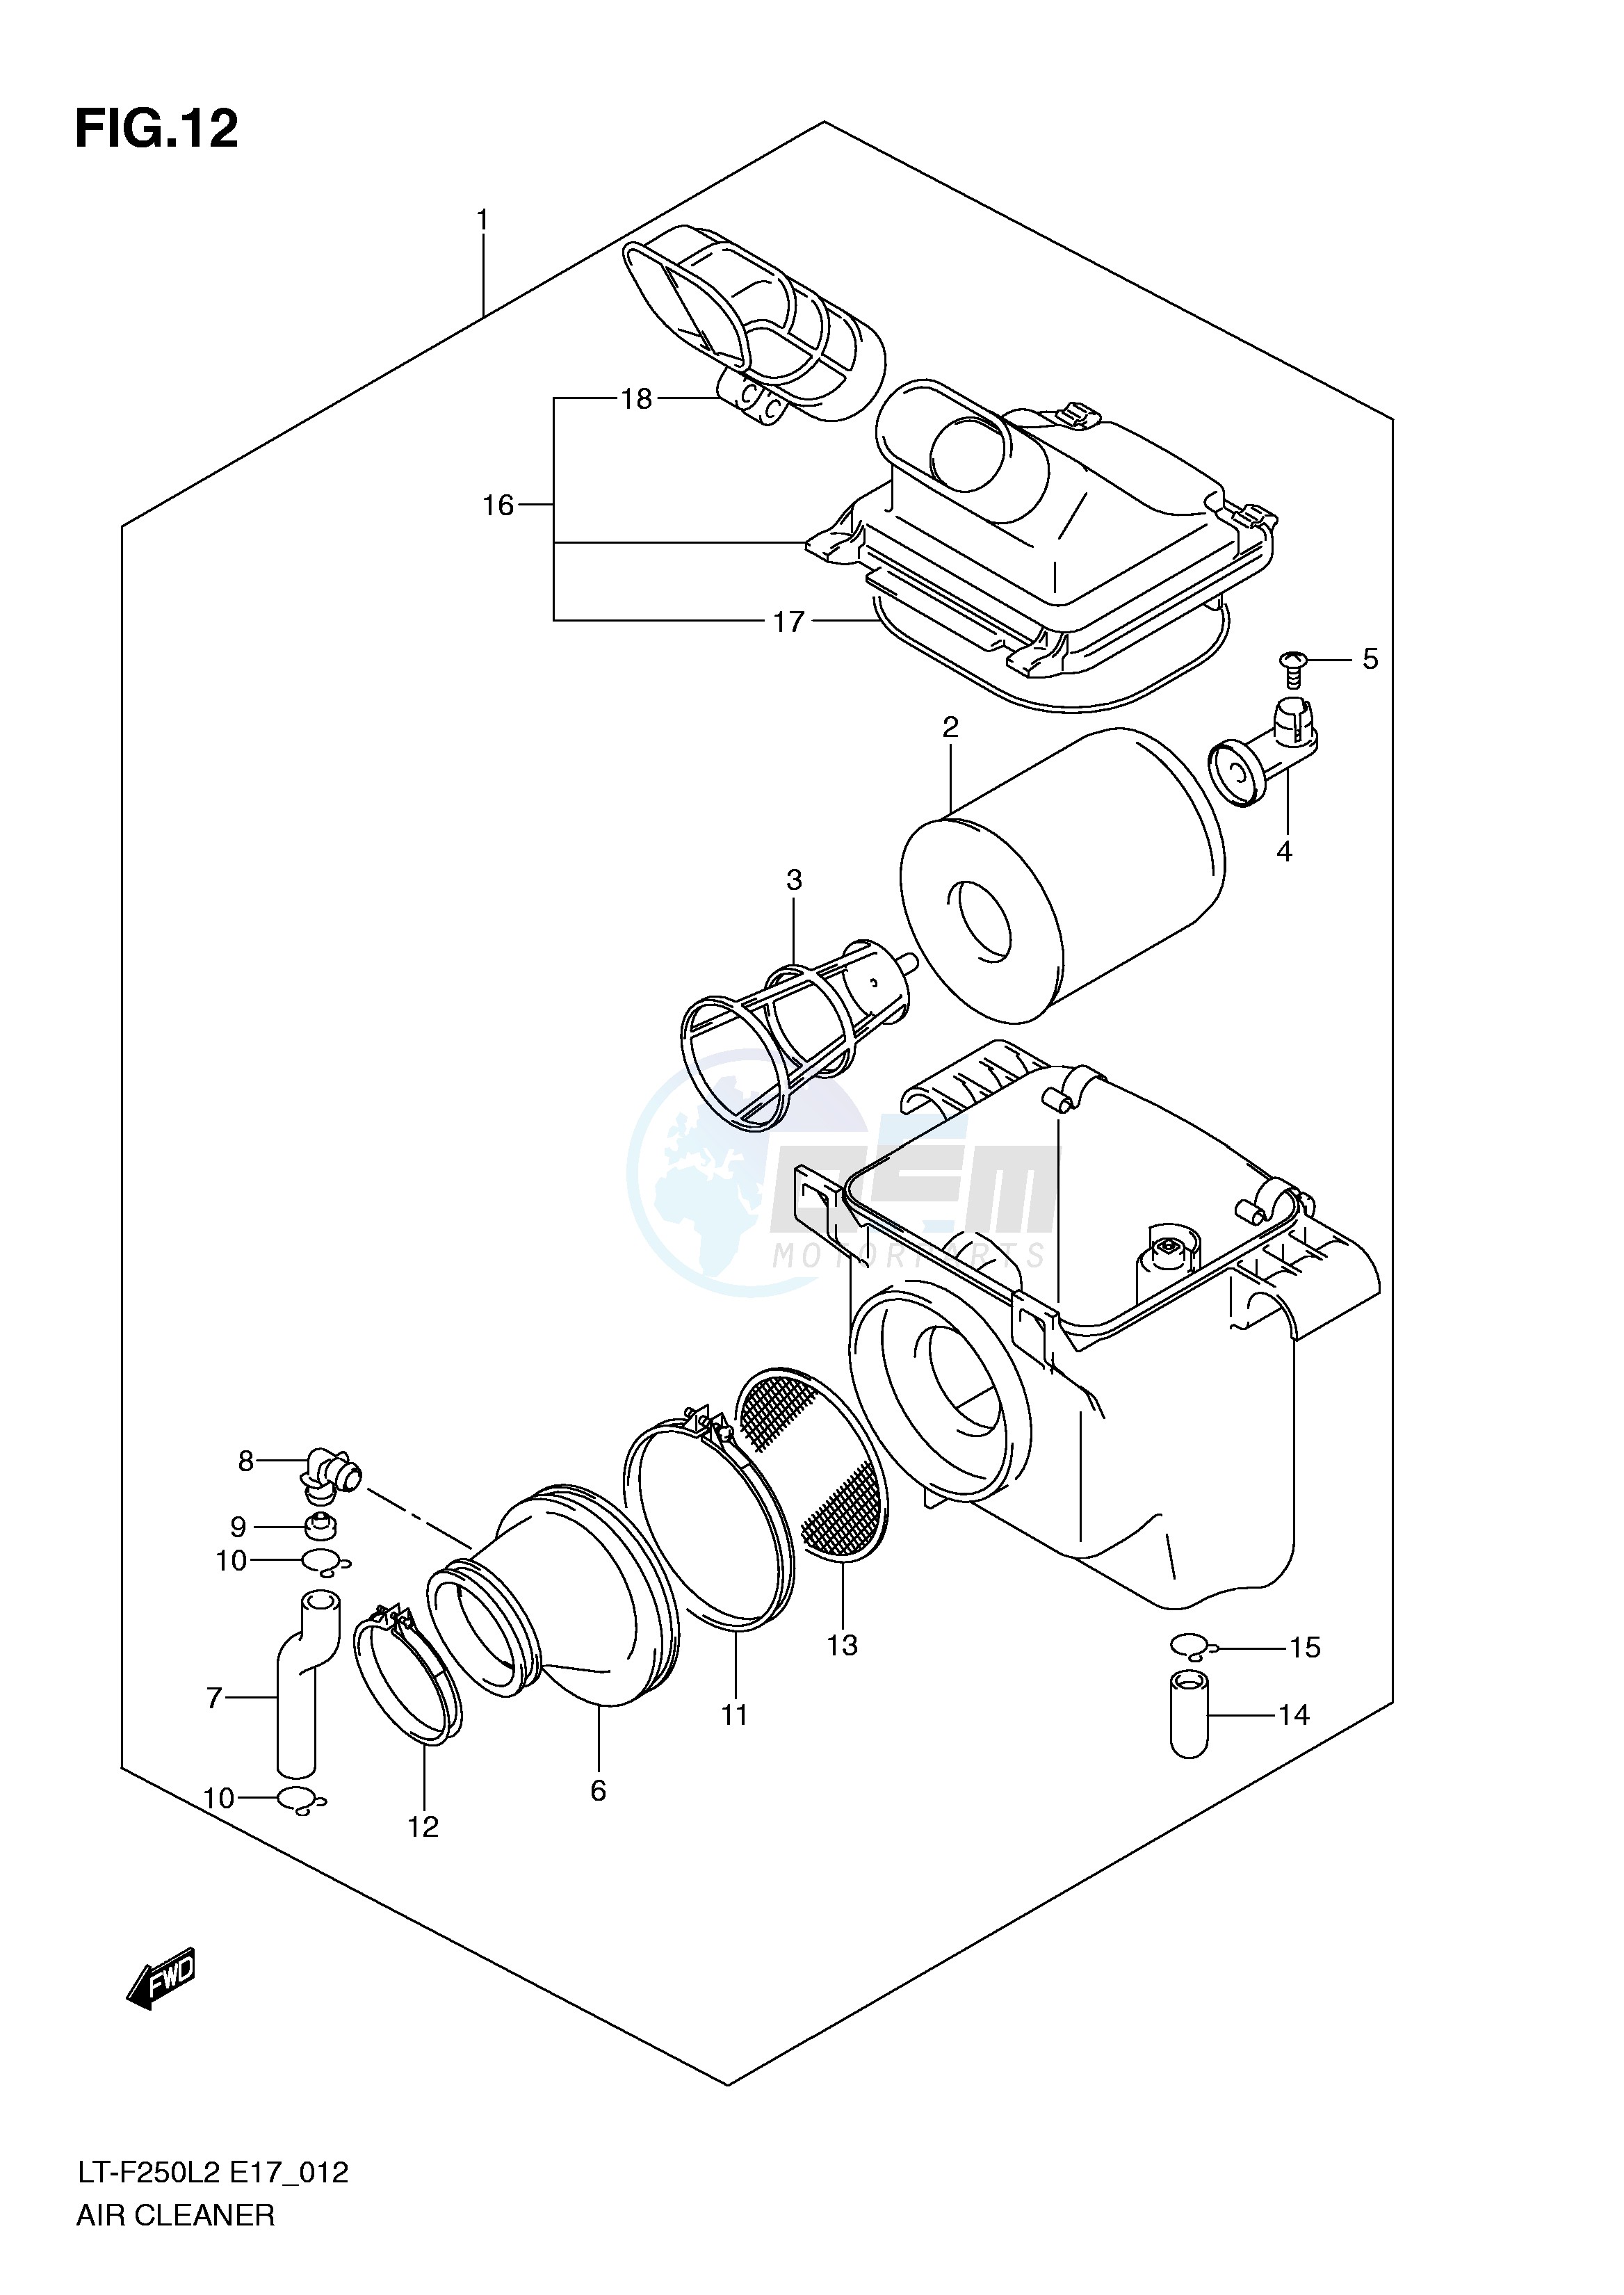 AIR CLEANER (LT-F250L2 E17) blueprint